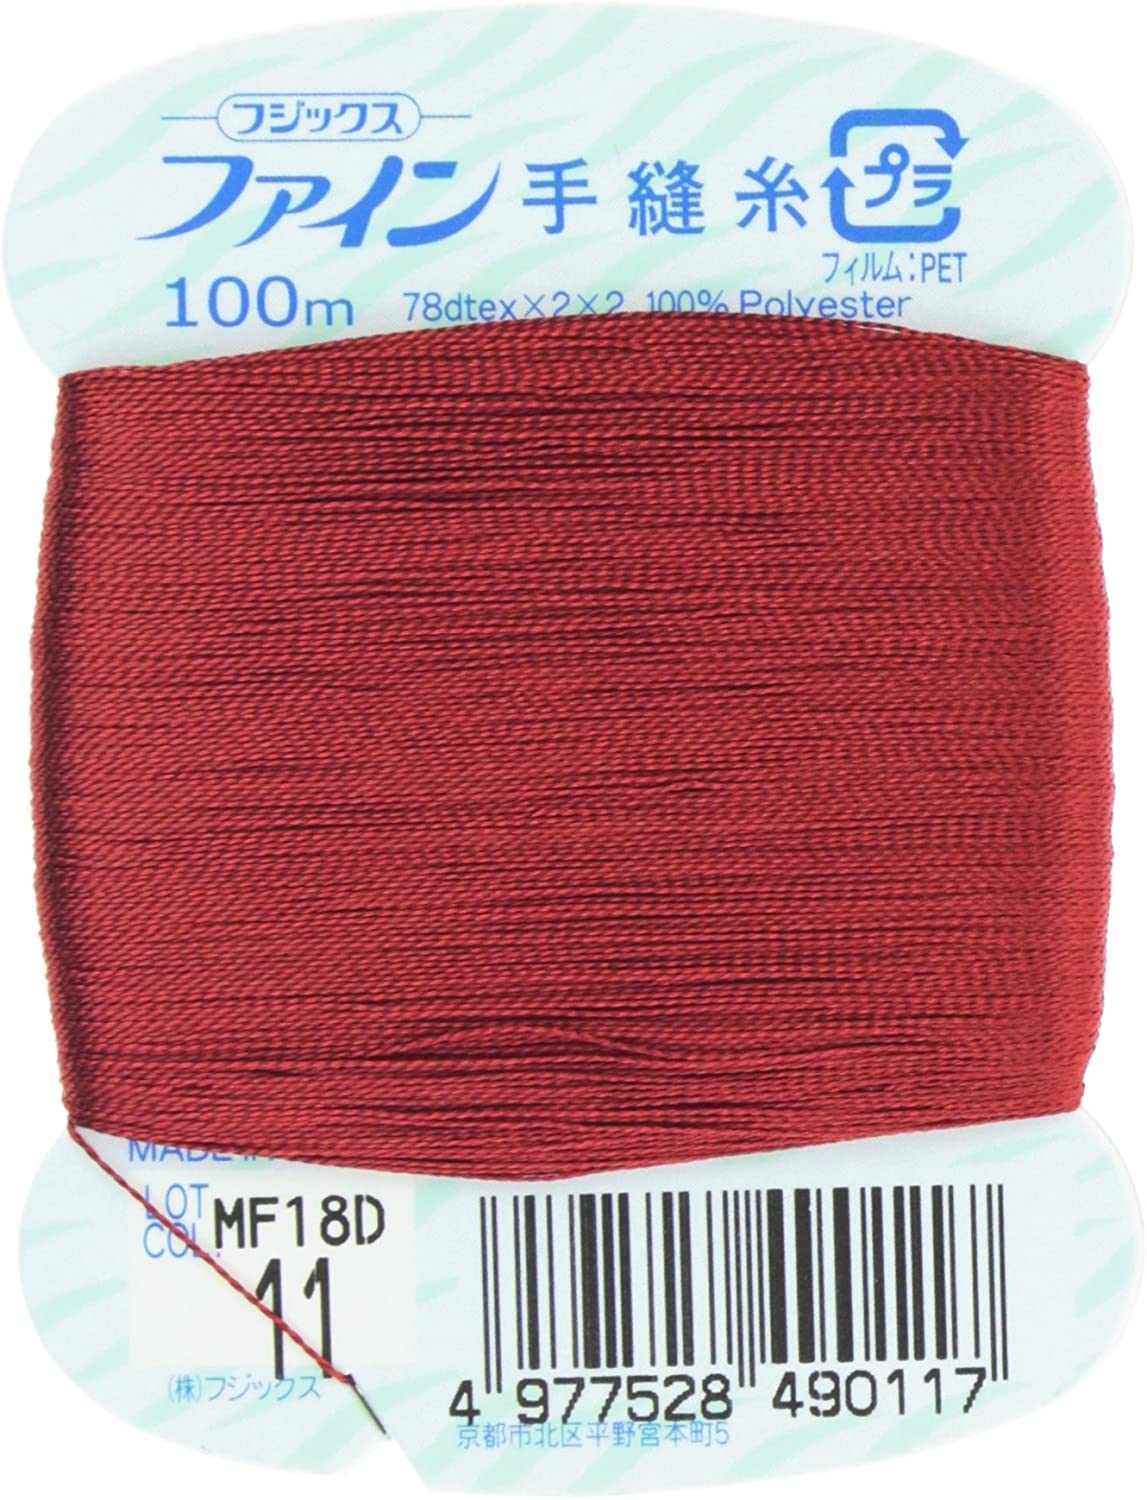 FK49-11 Fine Hand Sewing Thread Bobbin #40 100m spool (pcs)